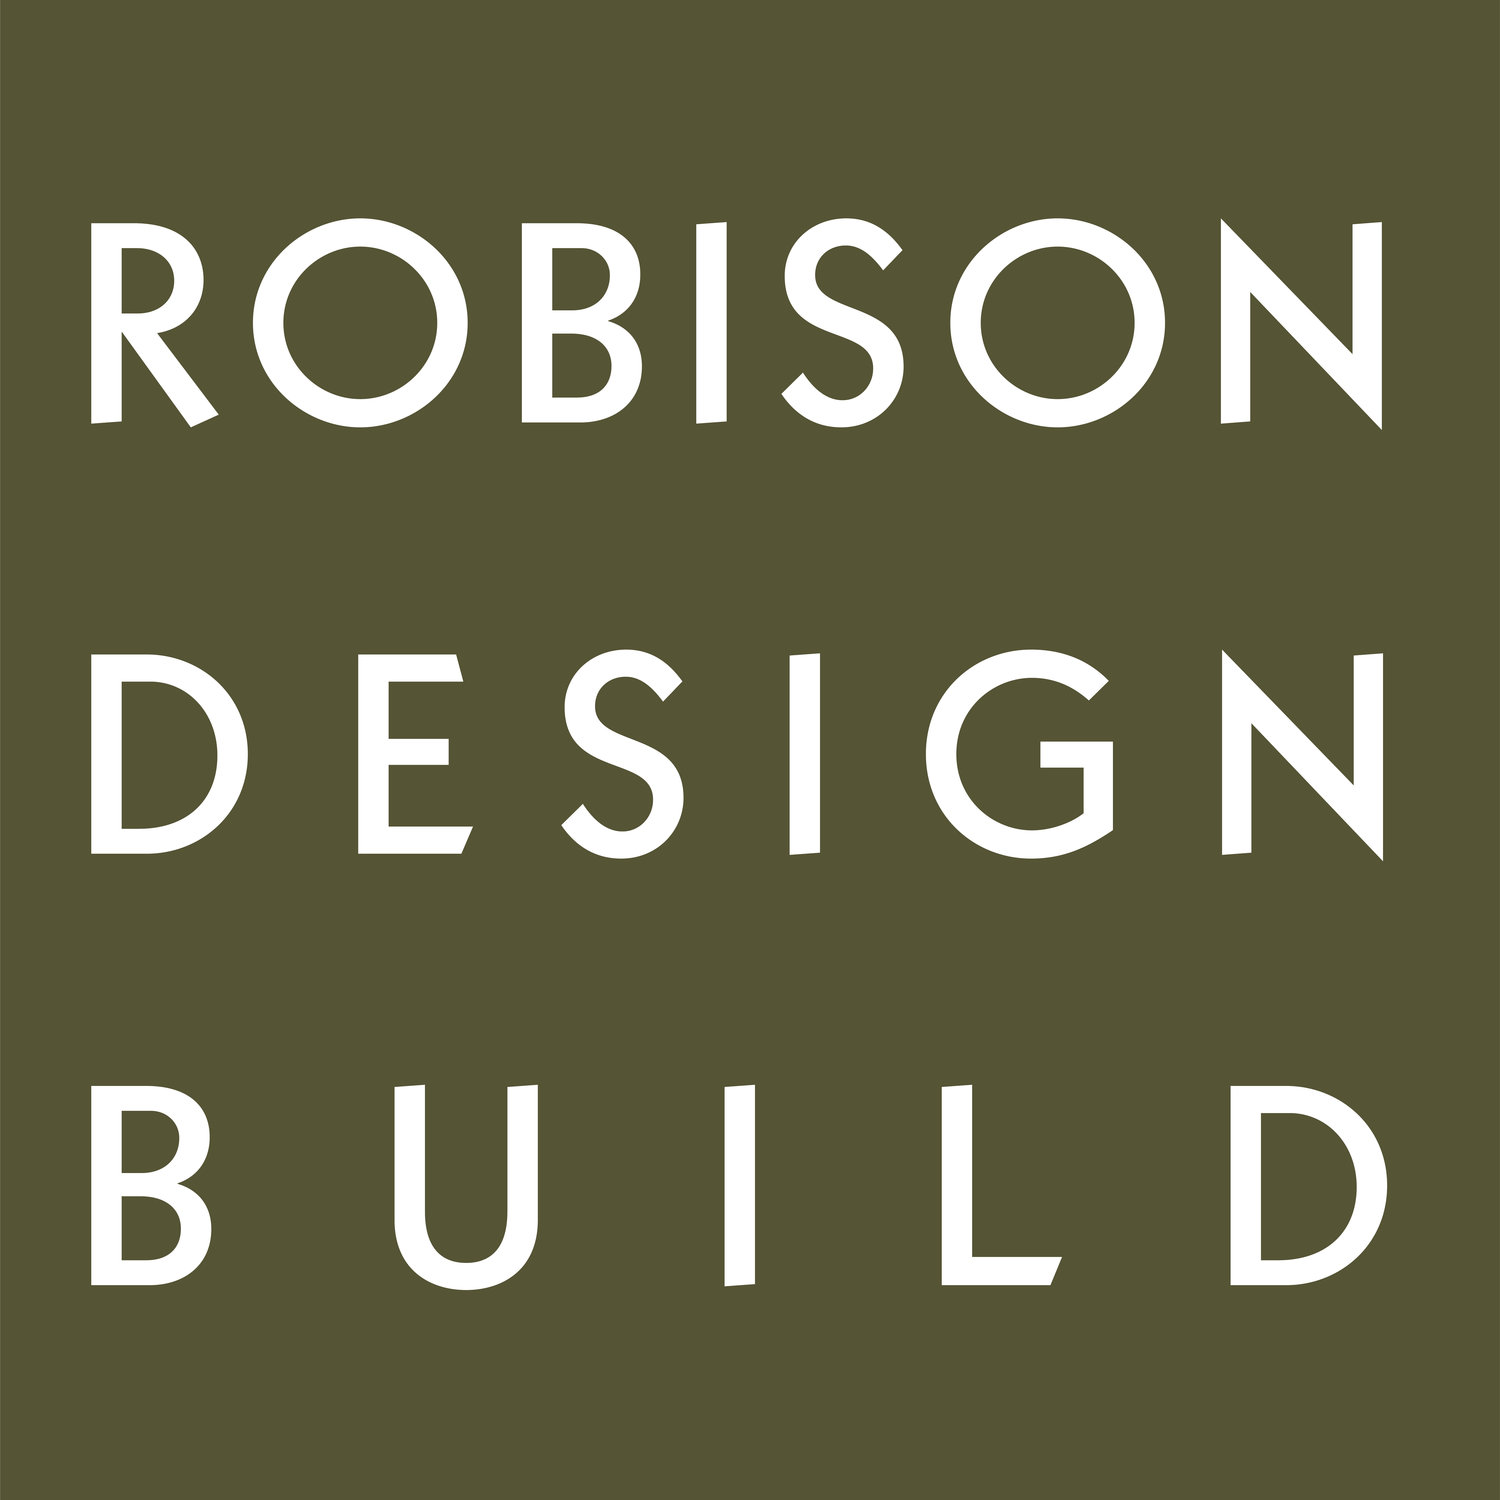 robison design build